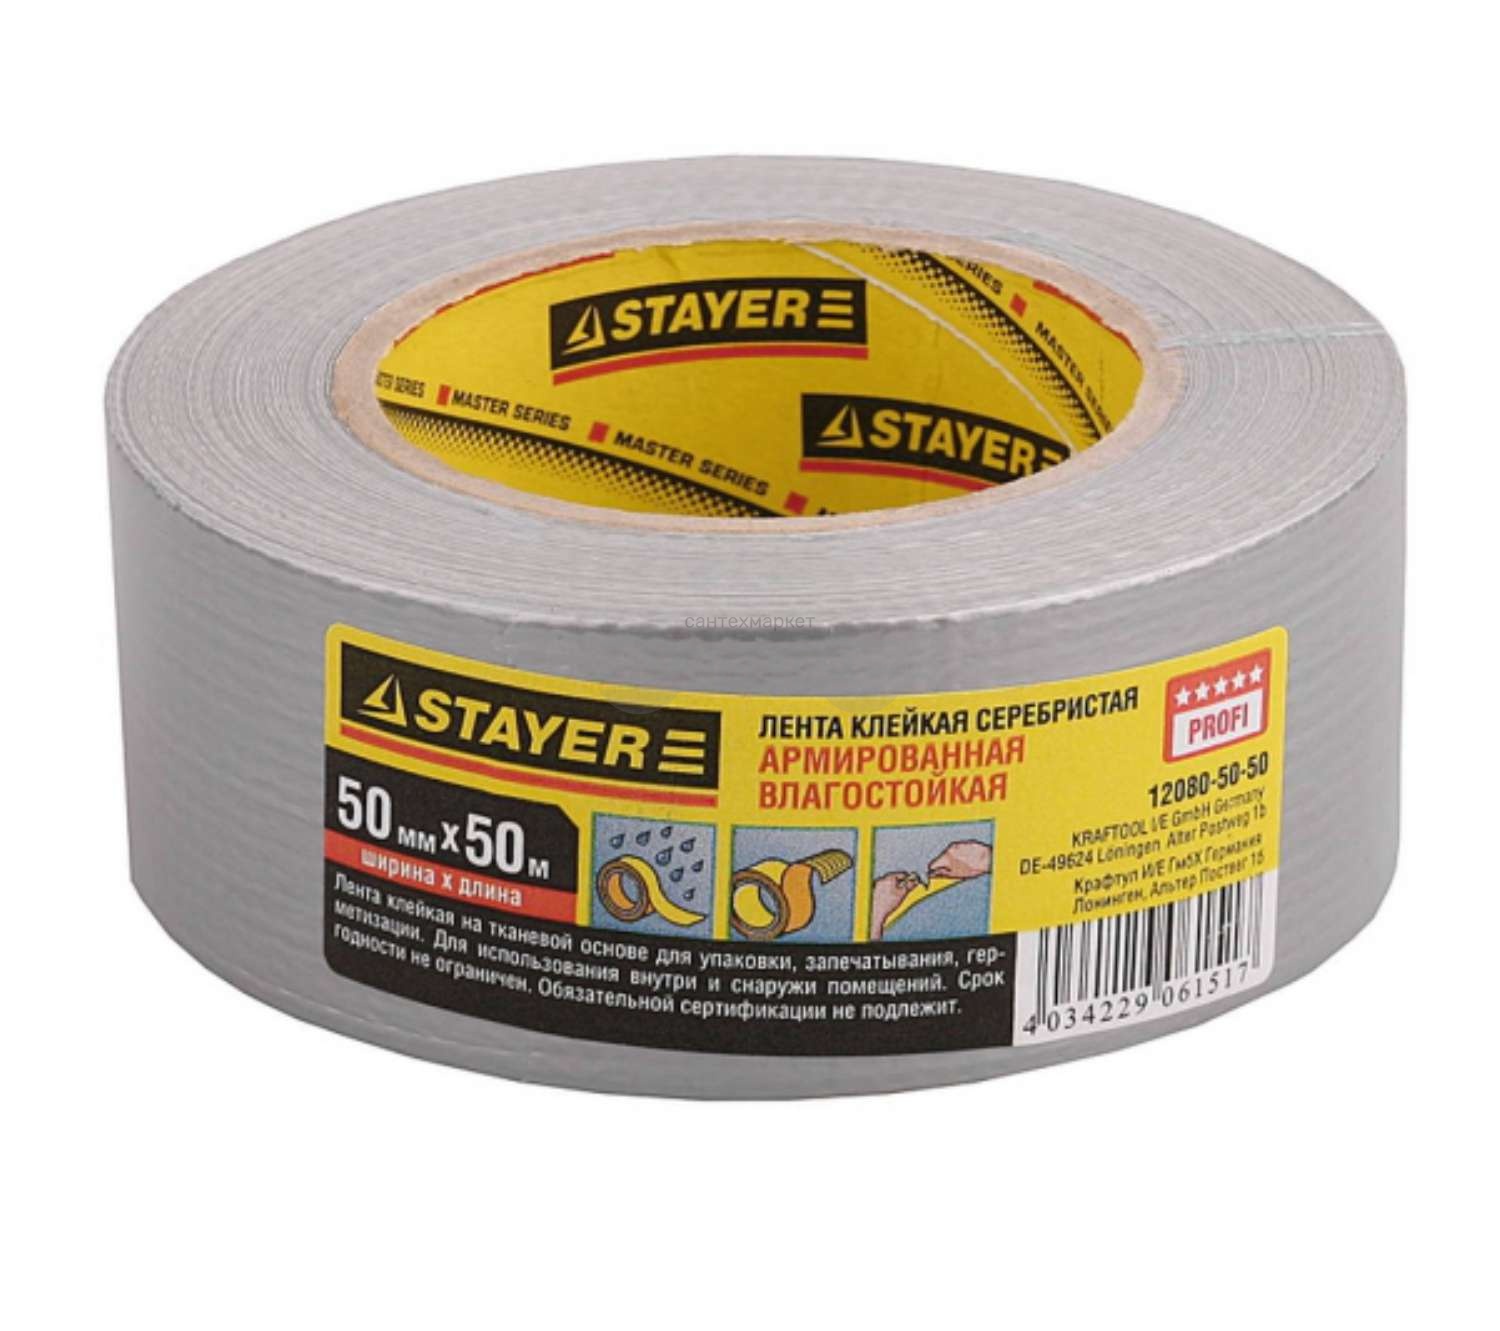 Купить Stayer 48х45 мм в интернет-магазине Тепловоз